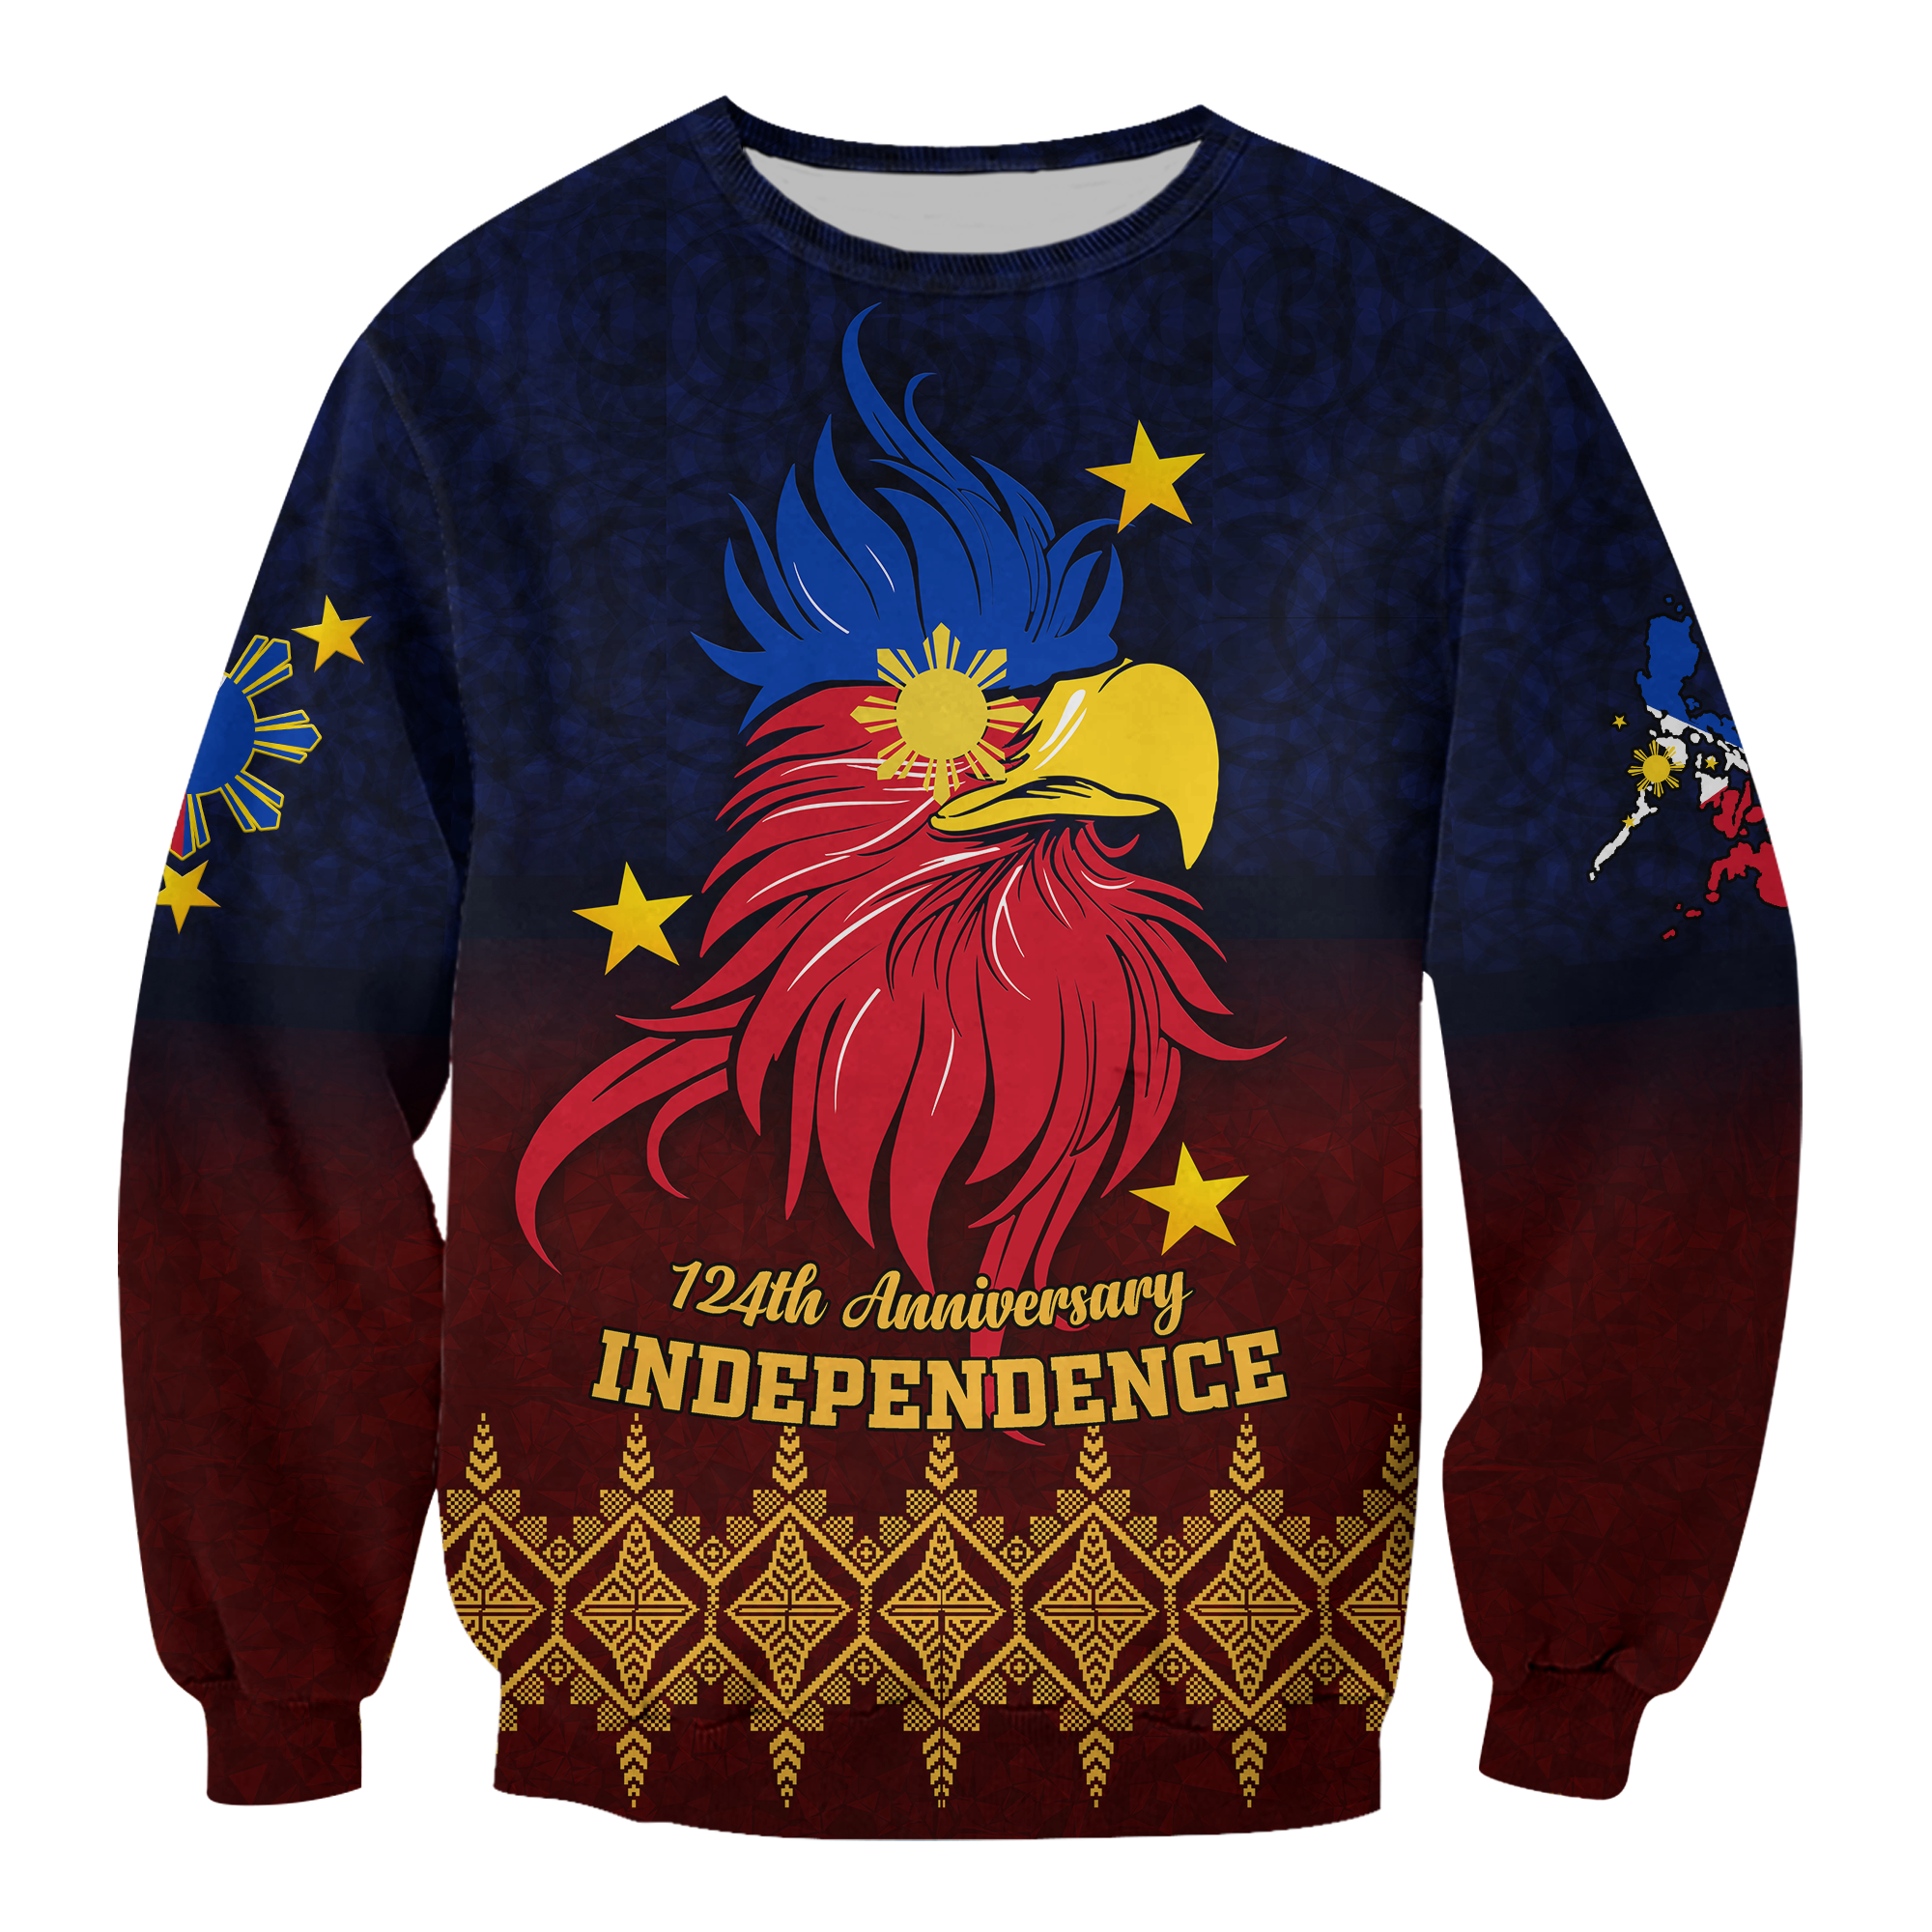 The Philippines Independence Anniversary 124th Years Sweatshirt - LT12 Unisex Blue - Polynesian Pride